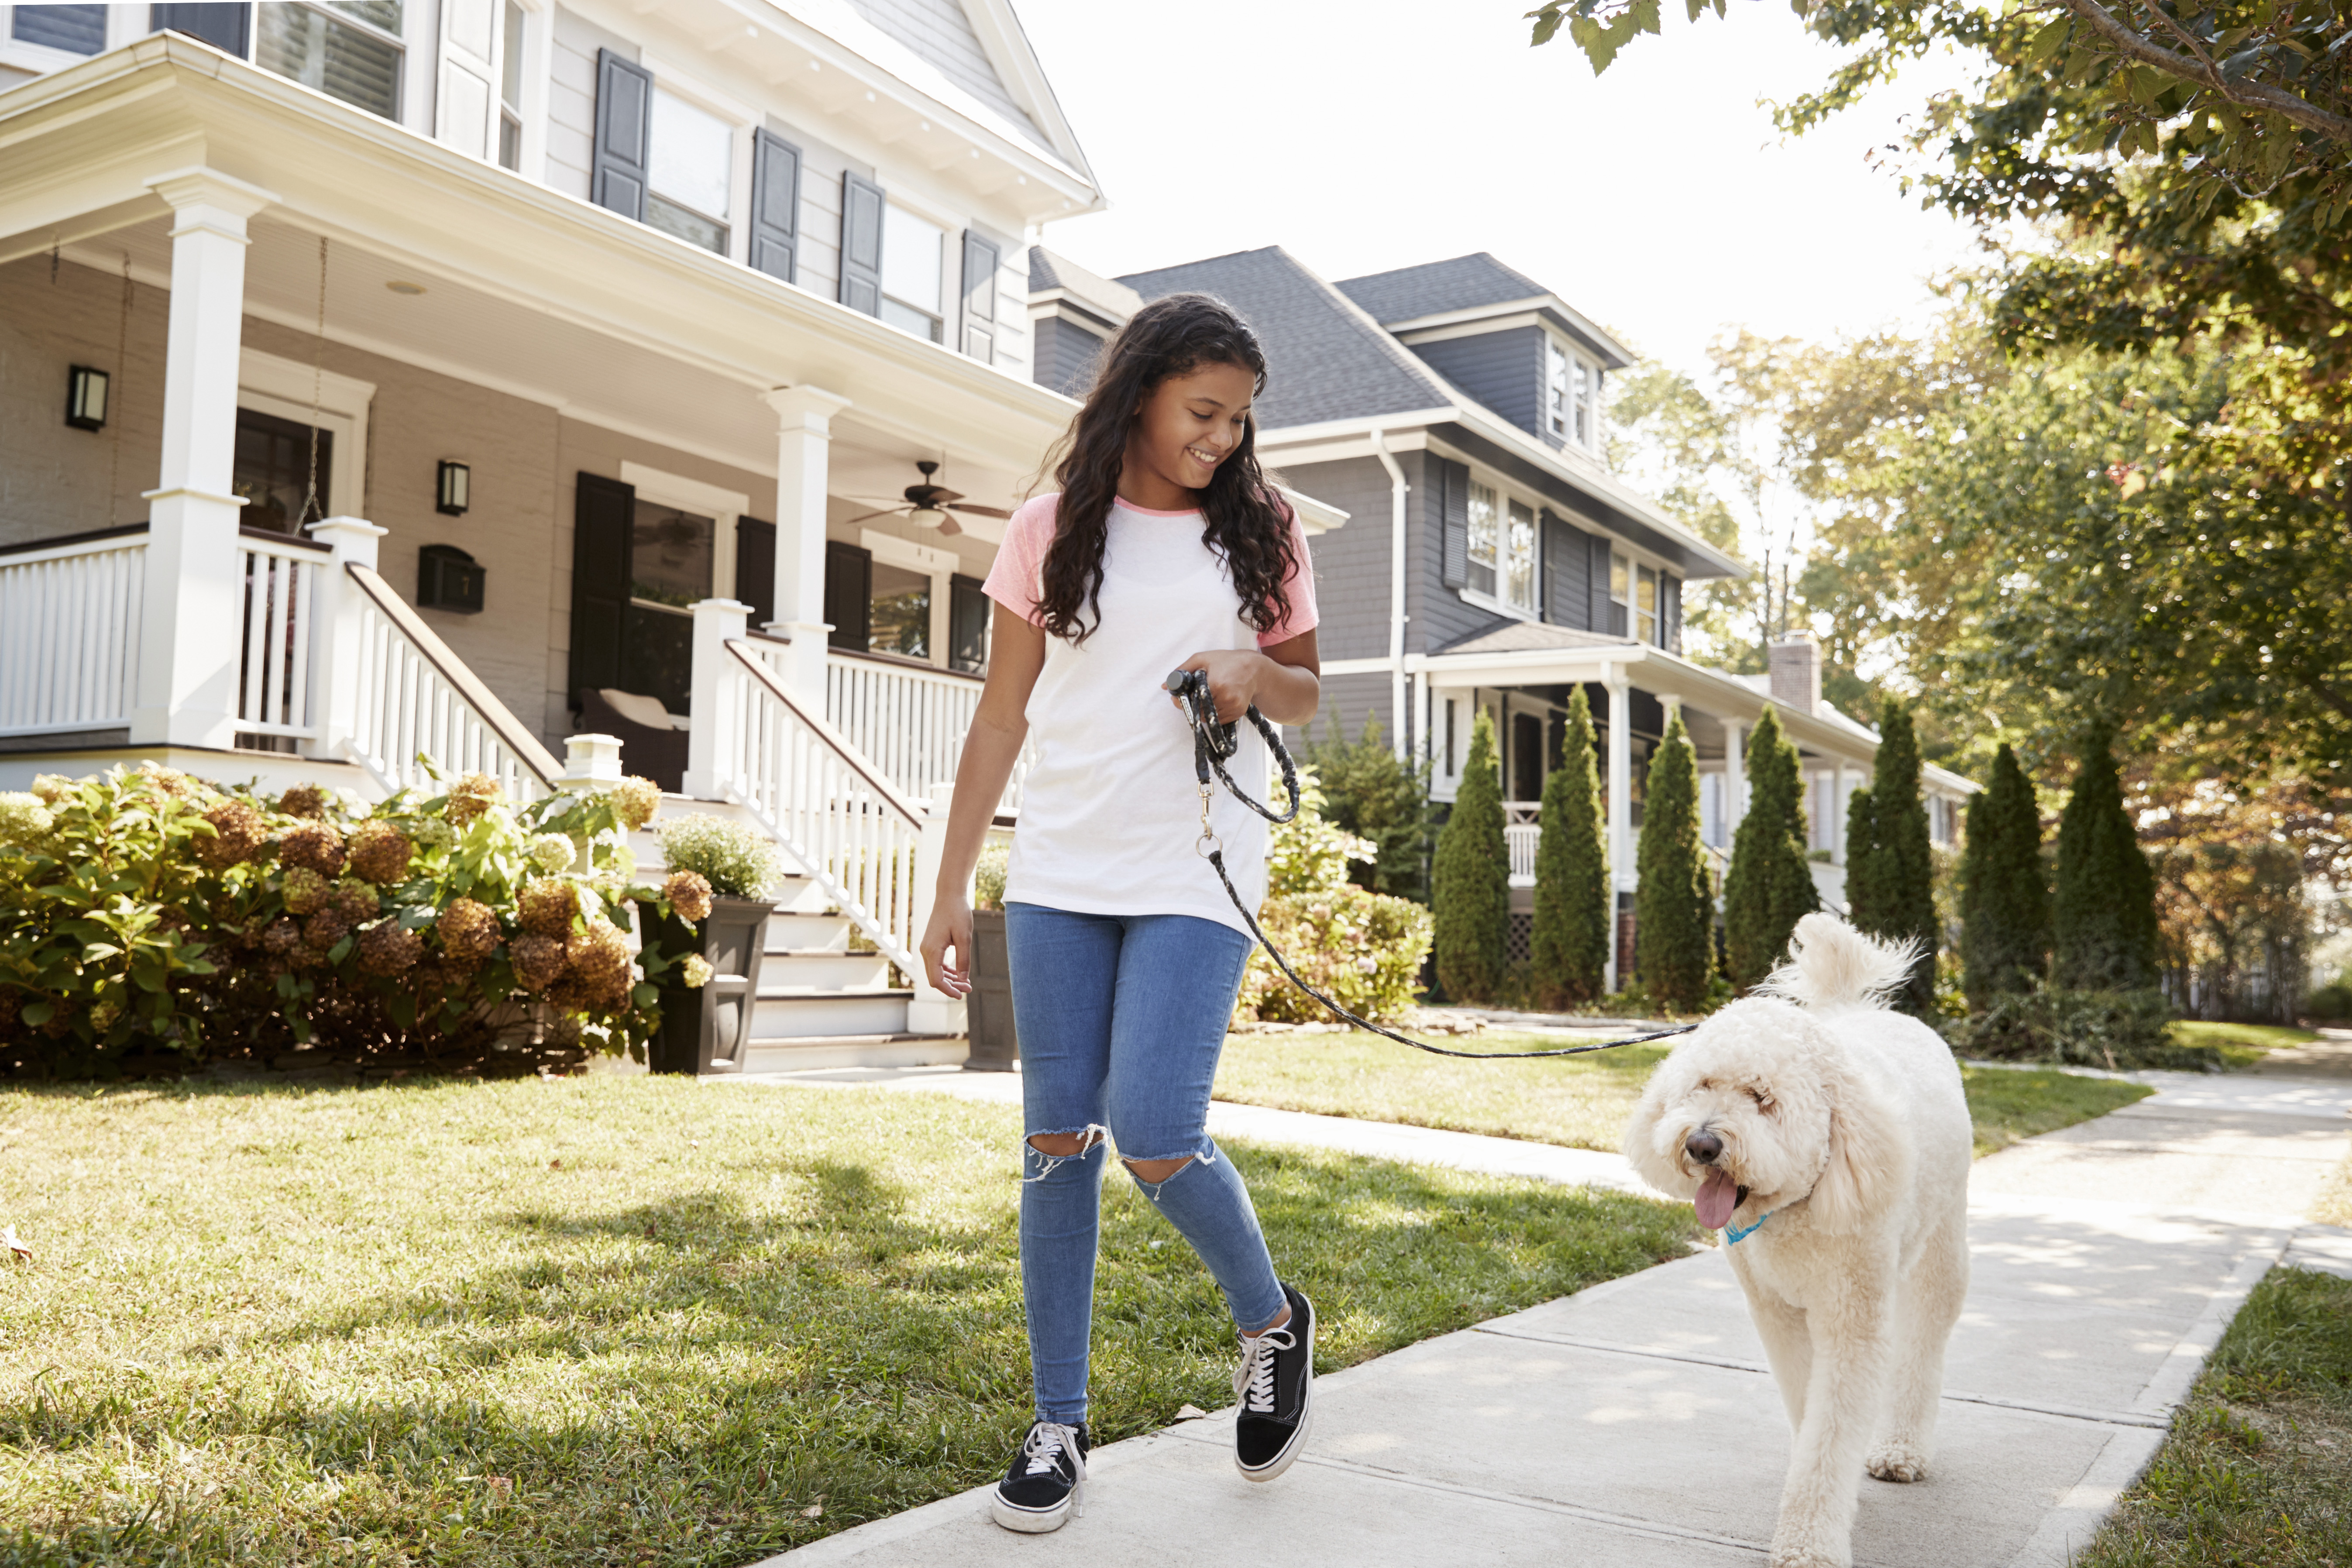 A girl walks a dog through a neighborhood